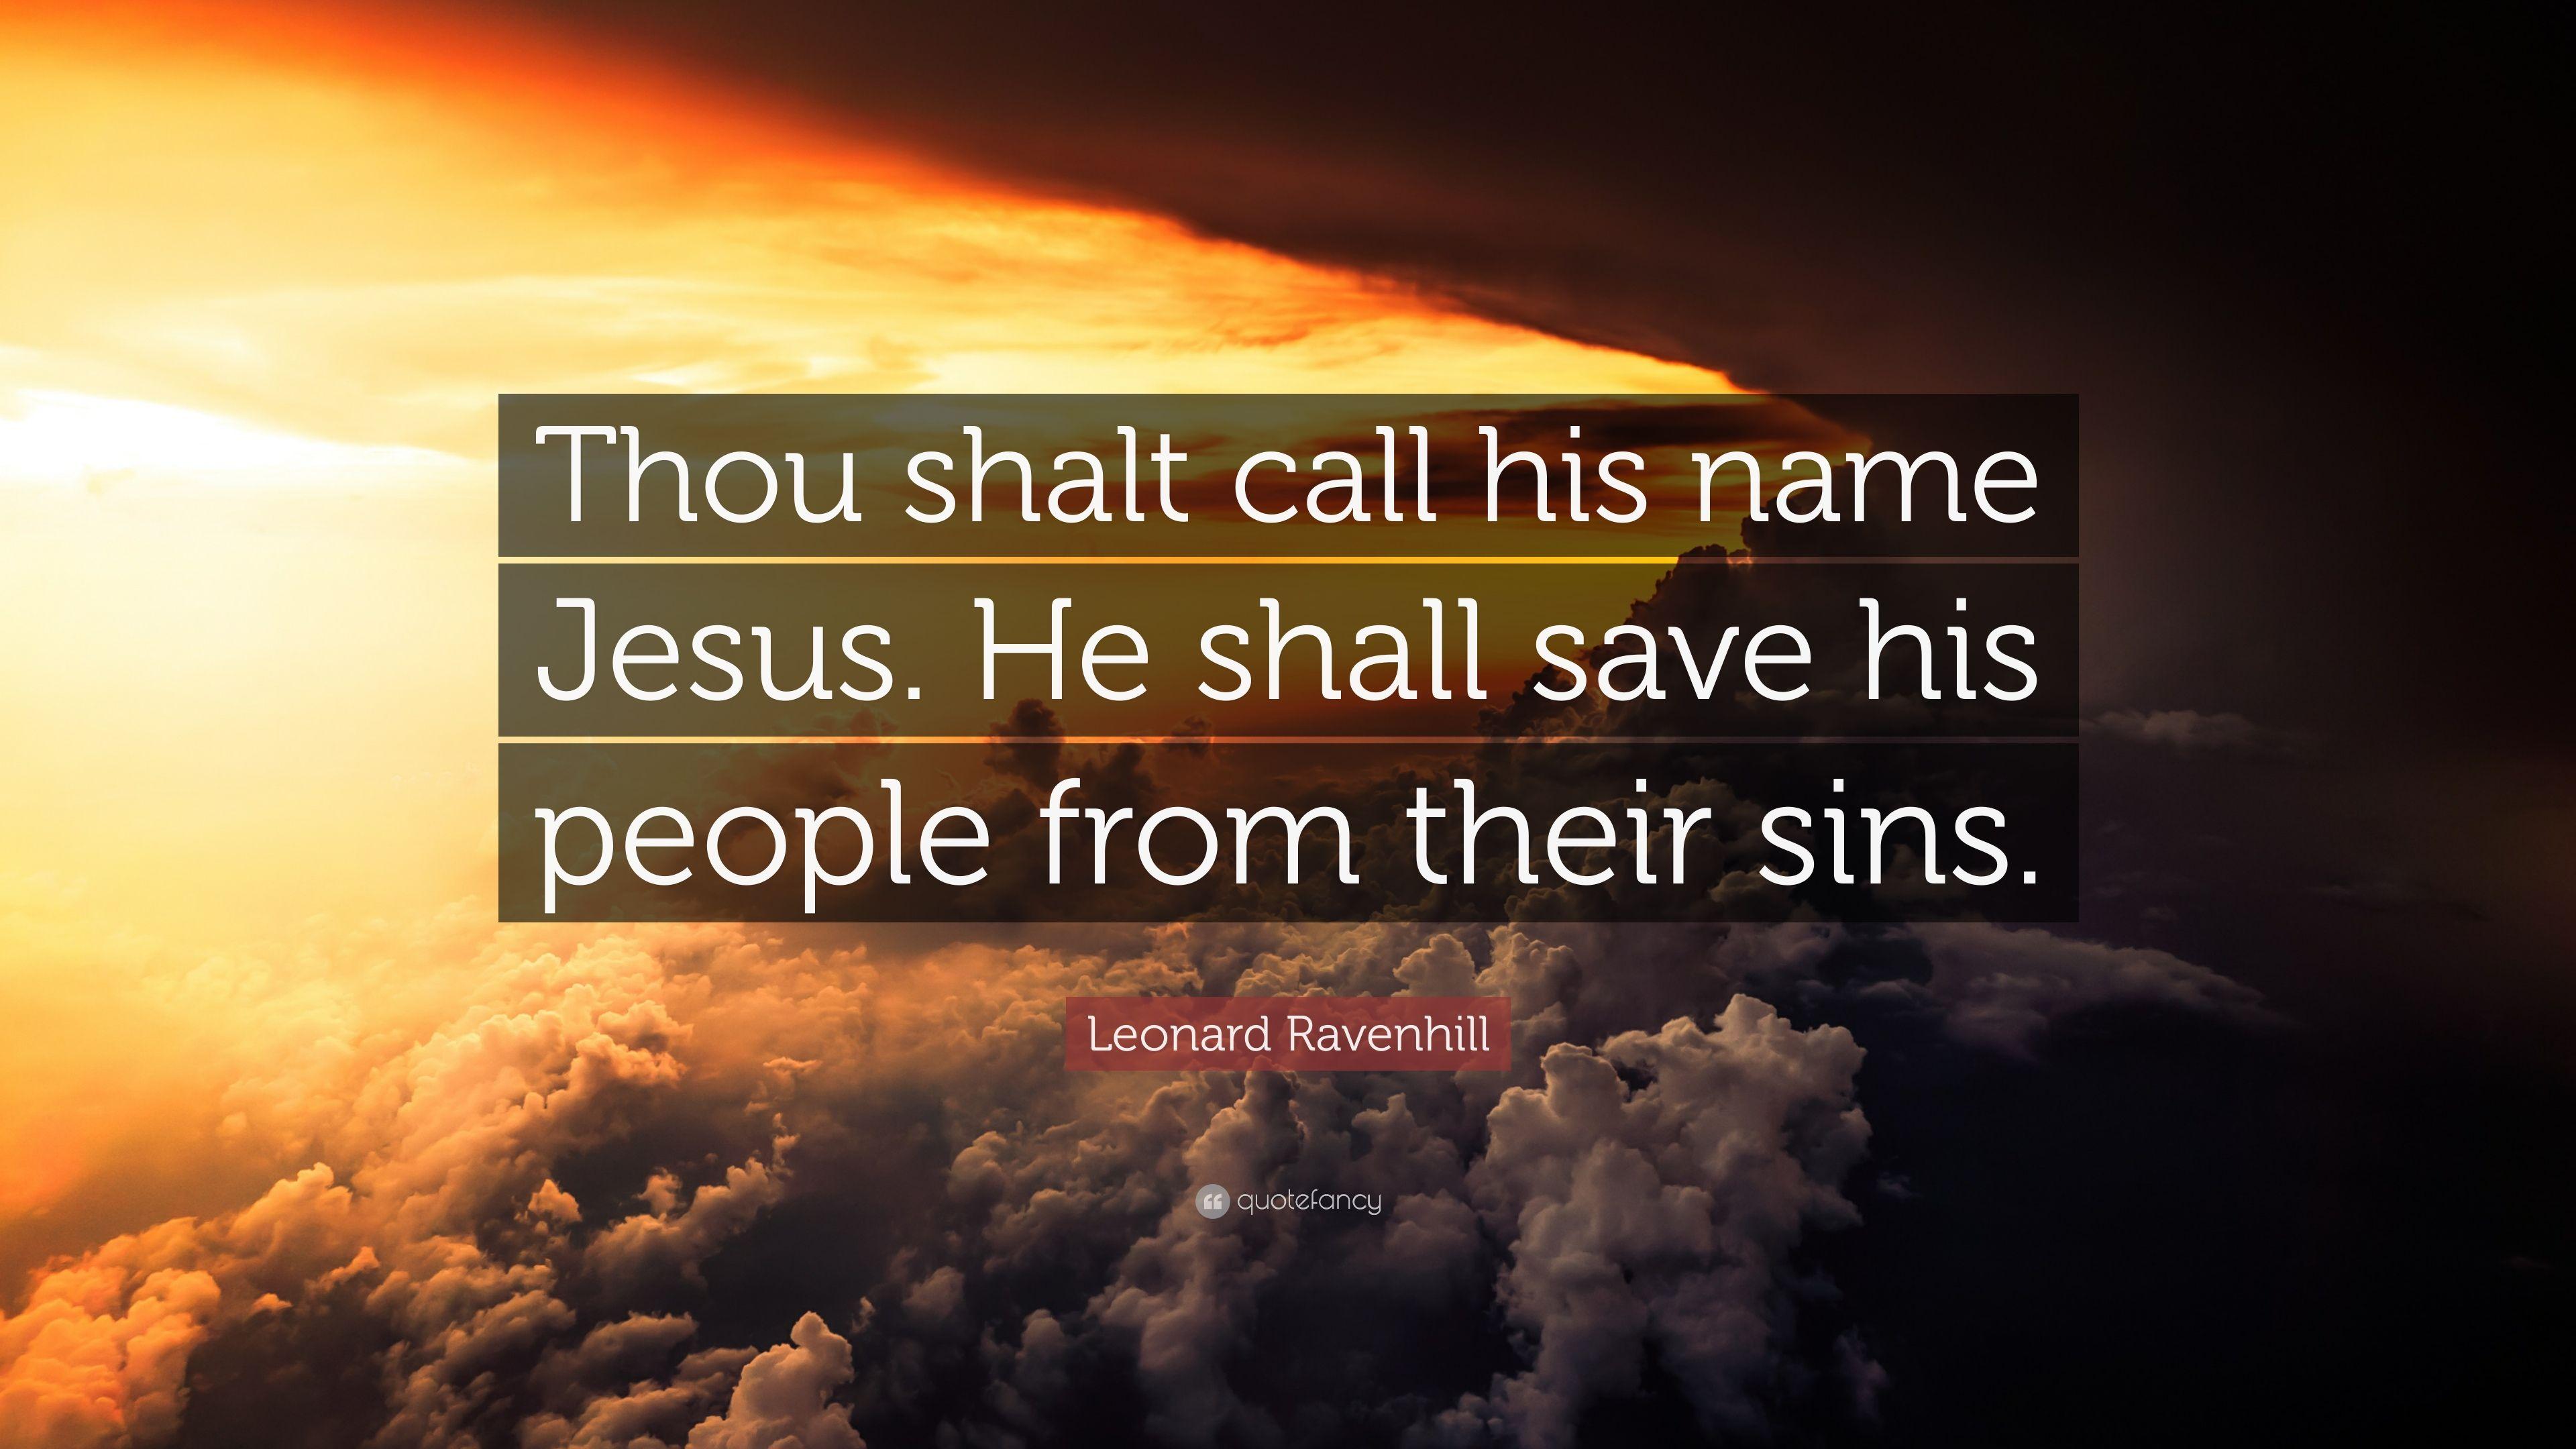 Leonard Ravenhill Quote: “Thou shalt call his name Jesus. He shall